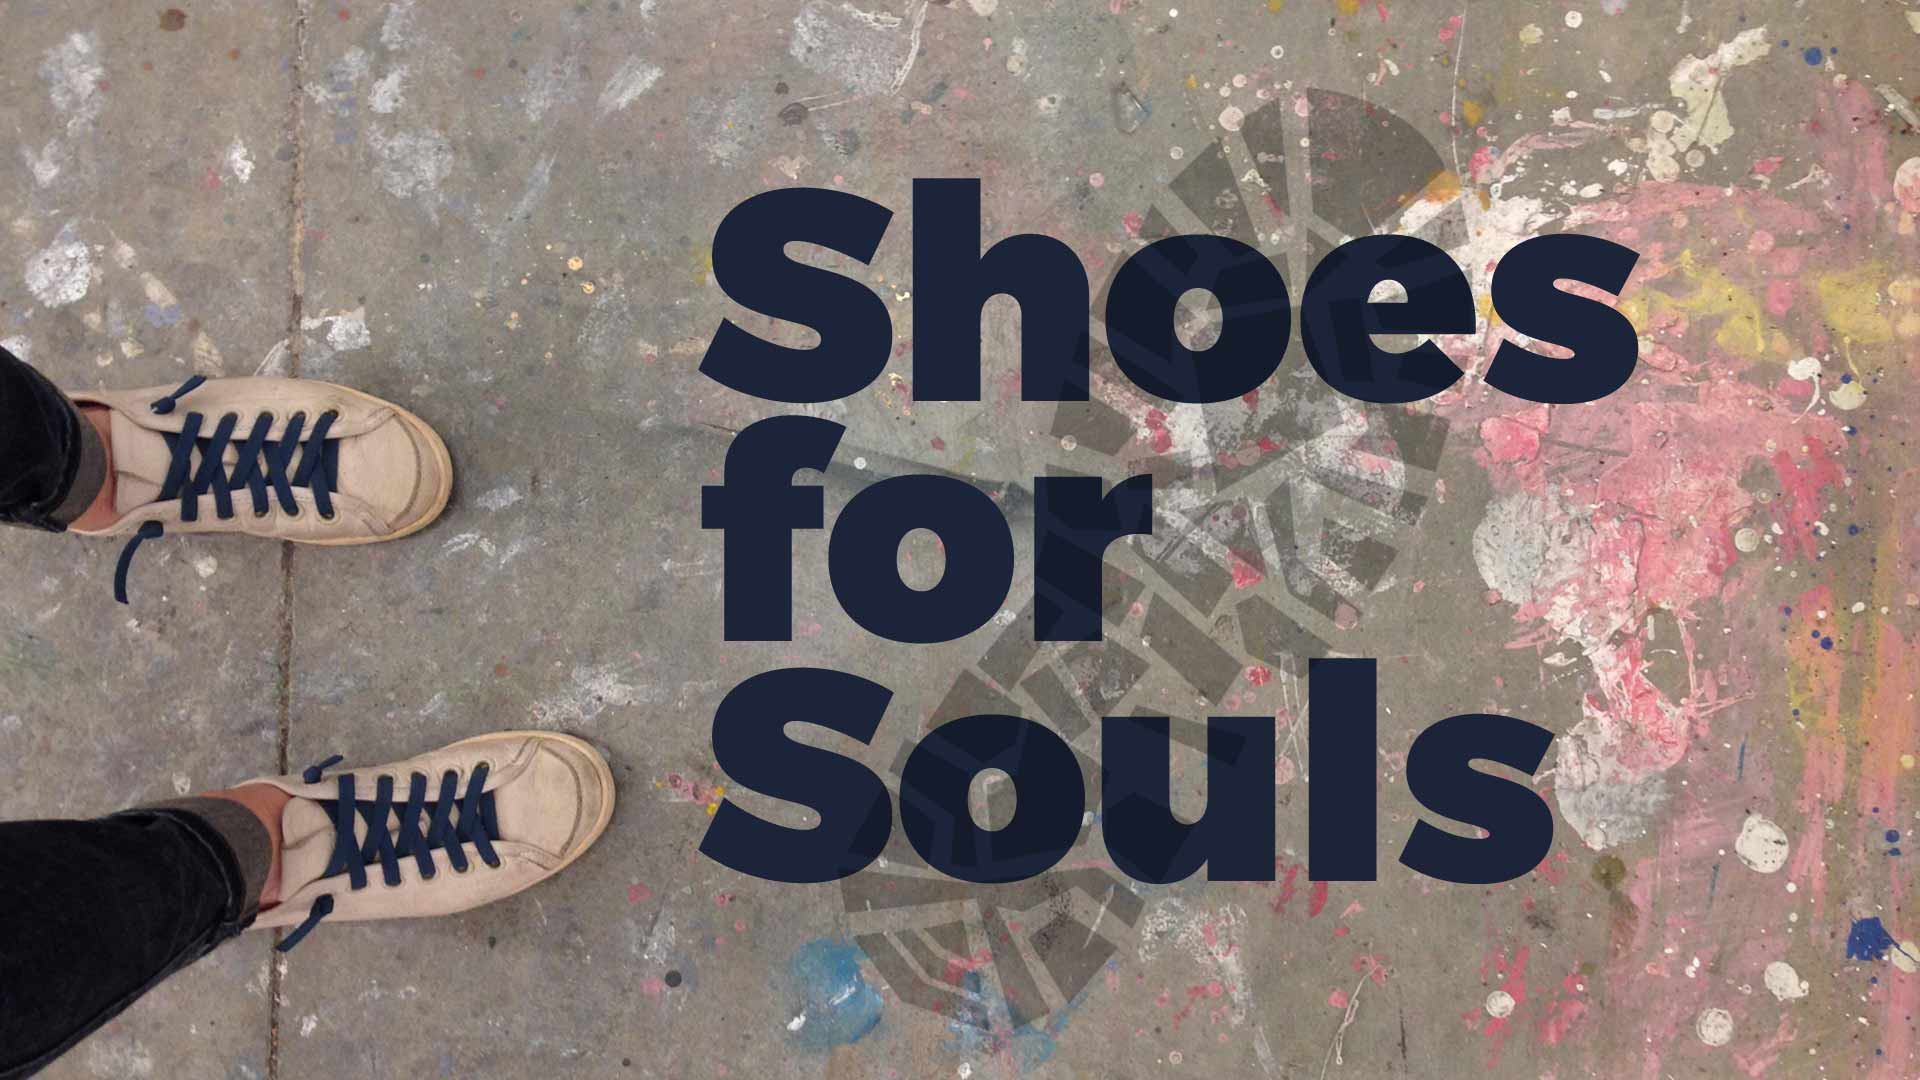 ShoesSoulsWebSocial.jpg